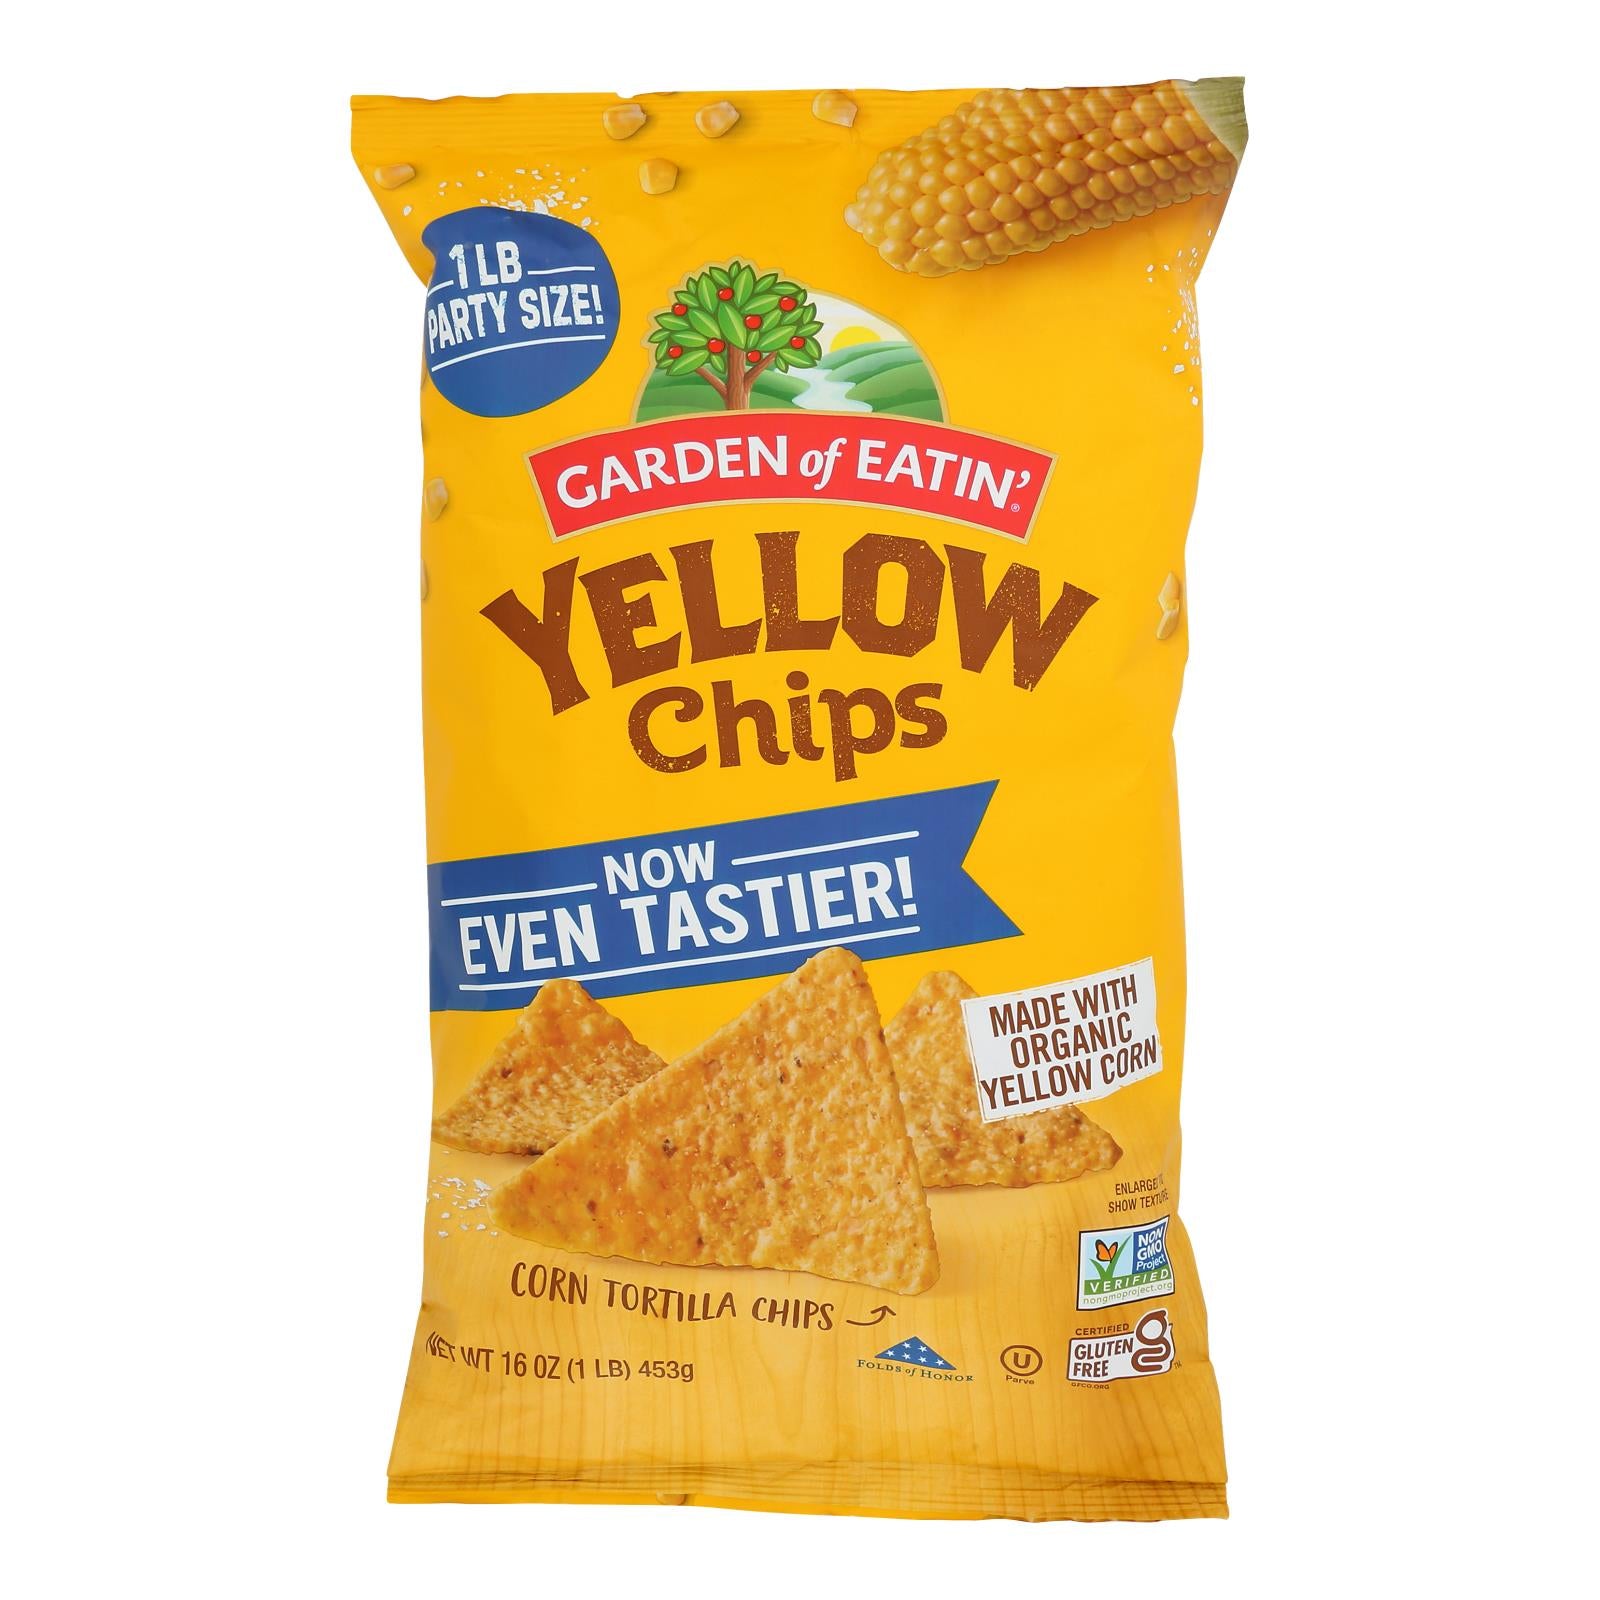 Garden Of Eatin' Yellow Corn Tortilla Chips - Tortilla Chips - Case Of 12 - 16 Oz.